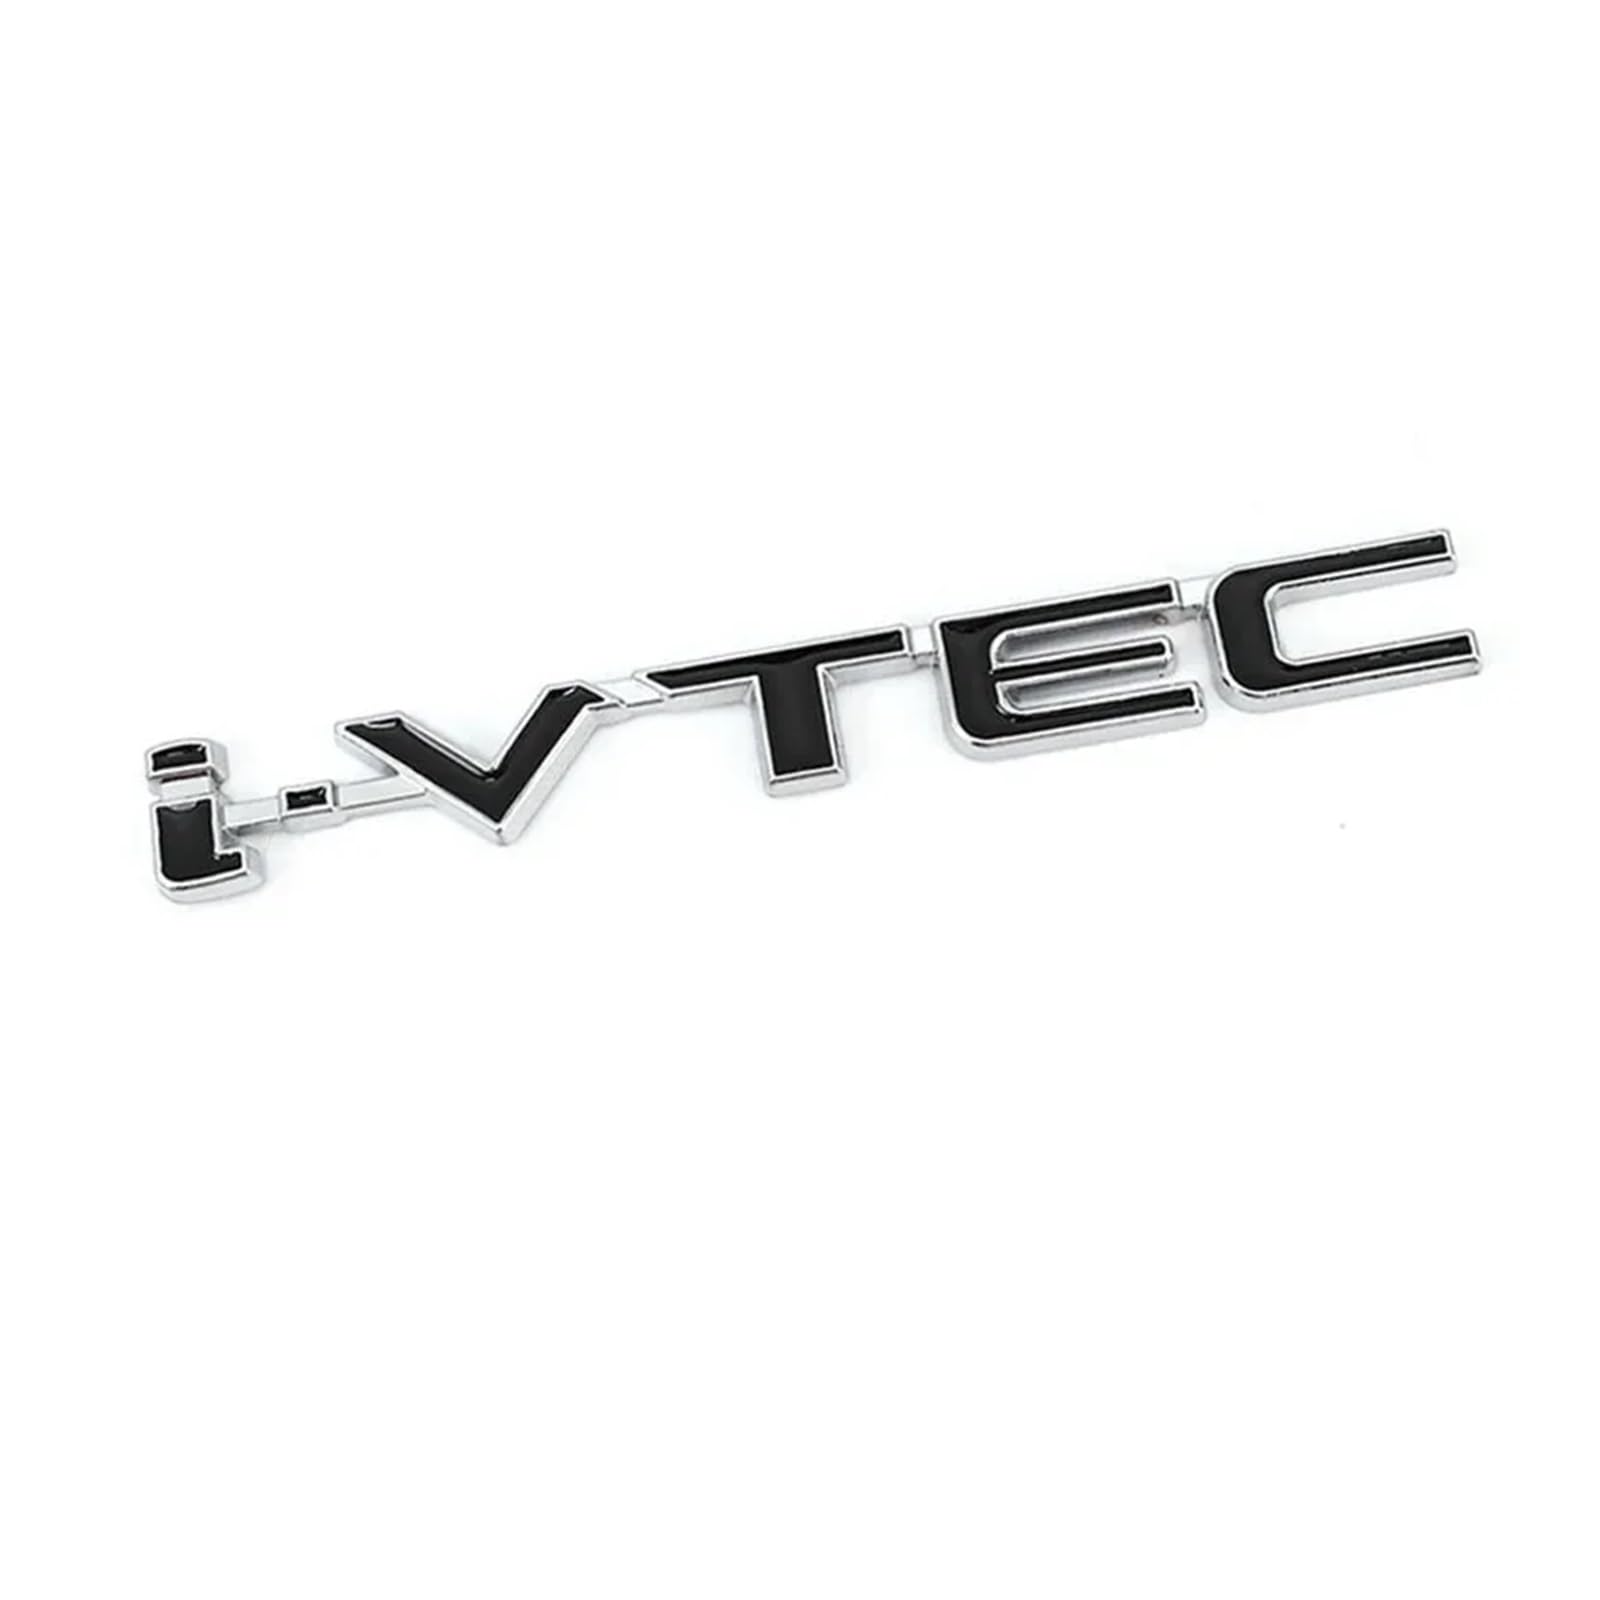 AQXYWQOL Autoaufkleber VTEC Emblem Aufkleber kompatibel mit I VTEC Badge Fit Accord Odyssey CRV HRV Außenzubehör Dekoration Farbe ist konstant, verblasst nicht und beschädigt(A Black) von AQXYWQOL